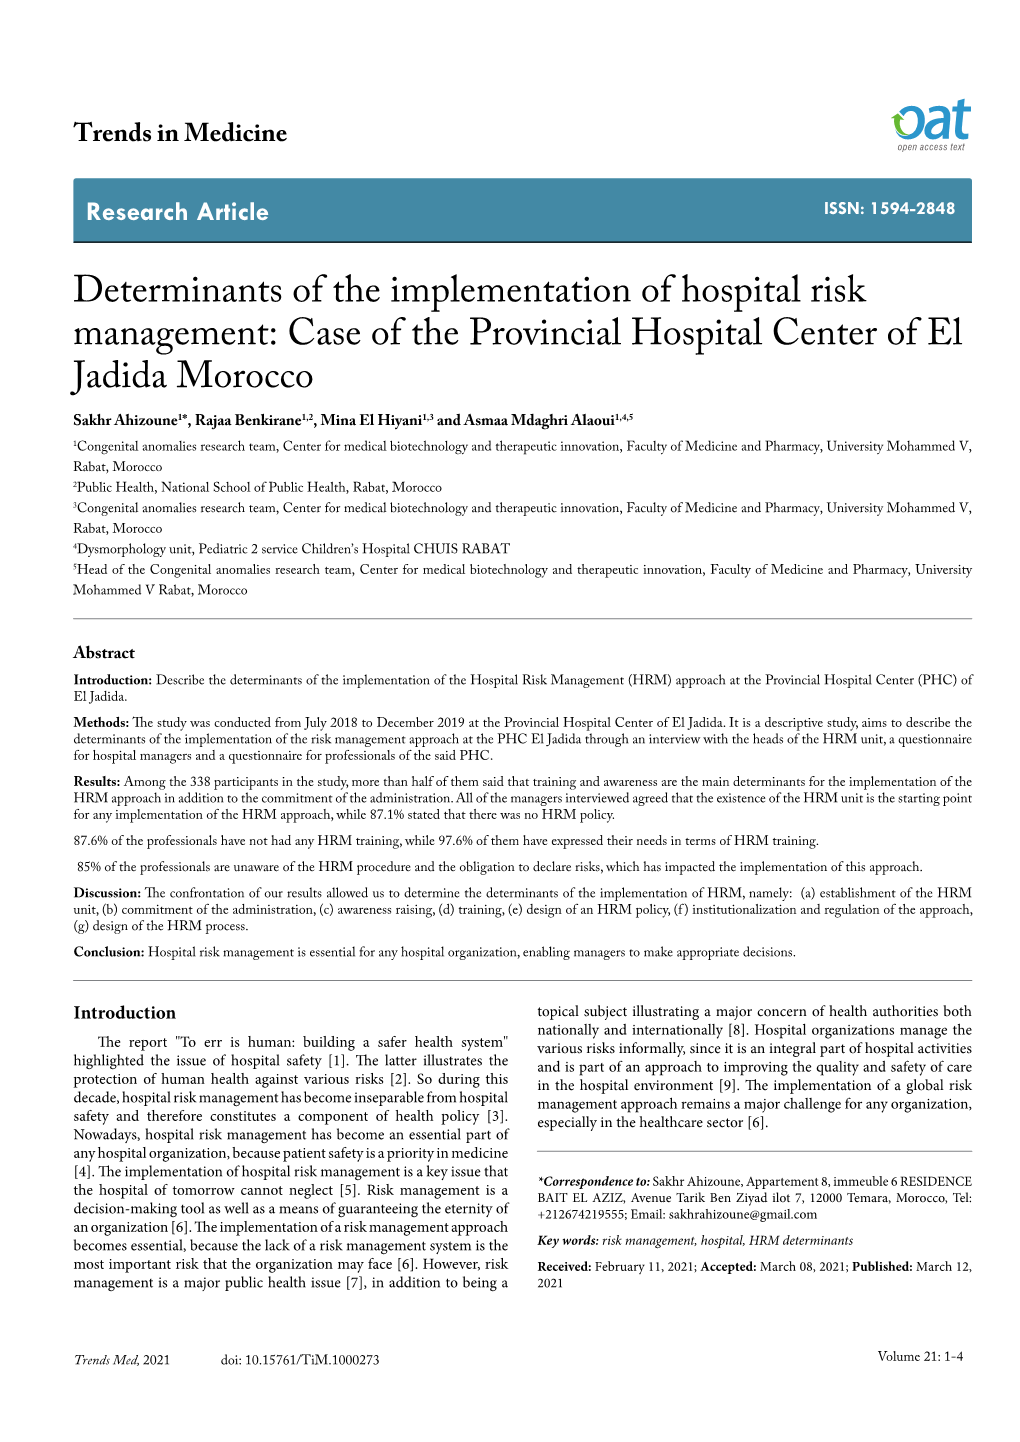 Case of the Provincial Hospital Center of El Jadida Morocco